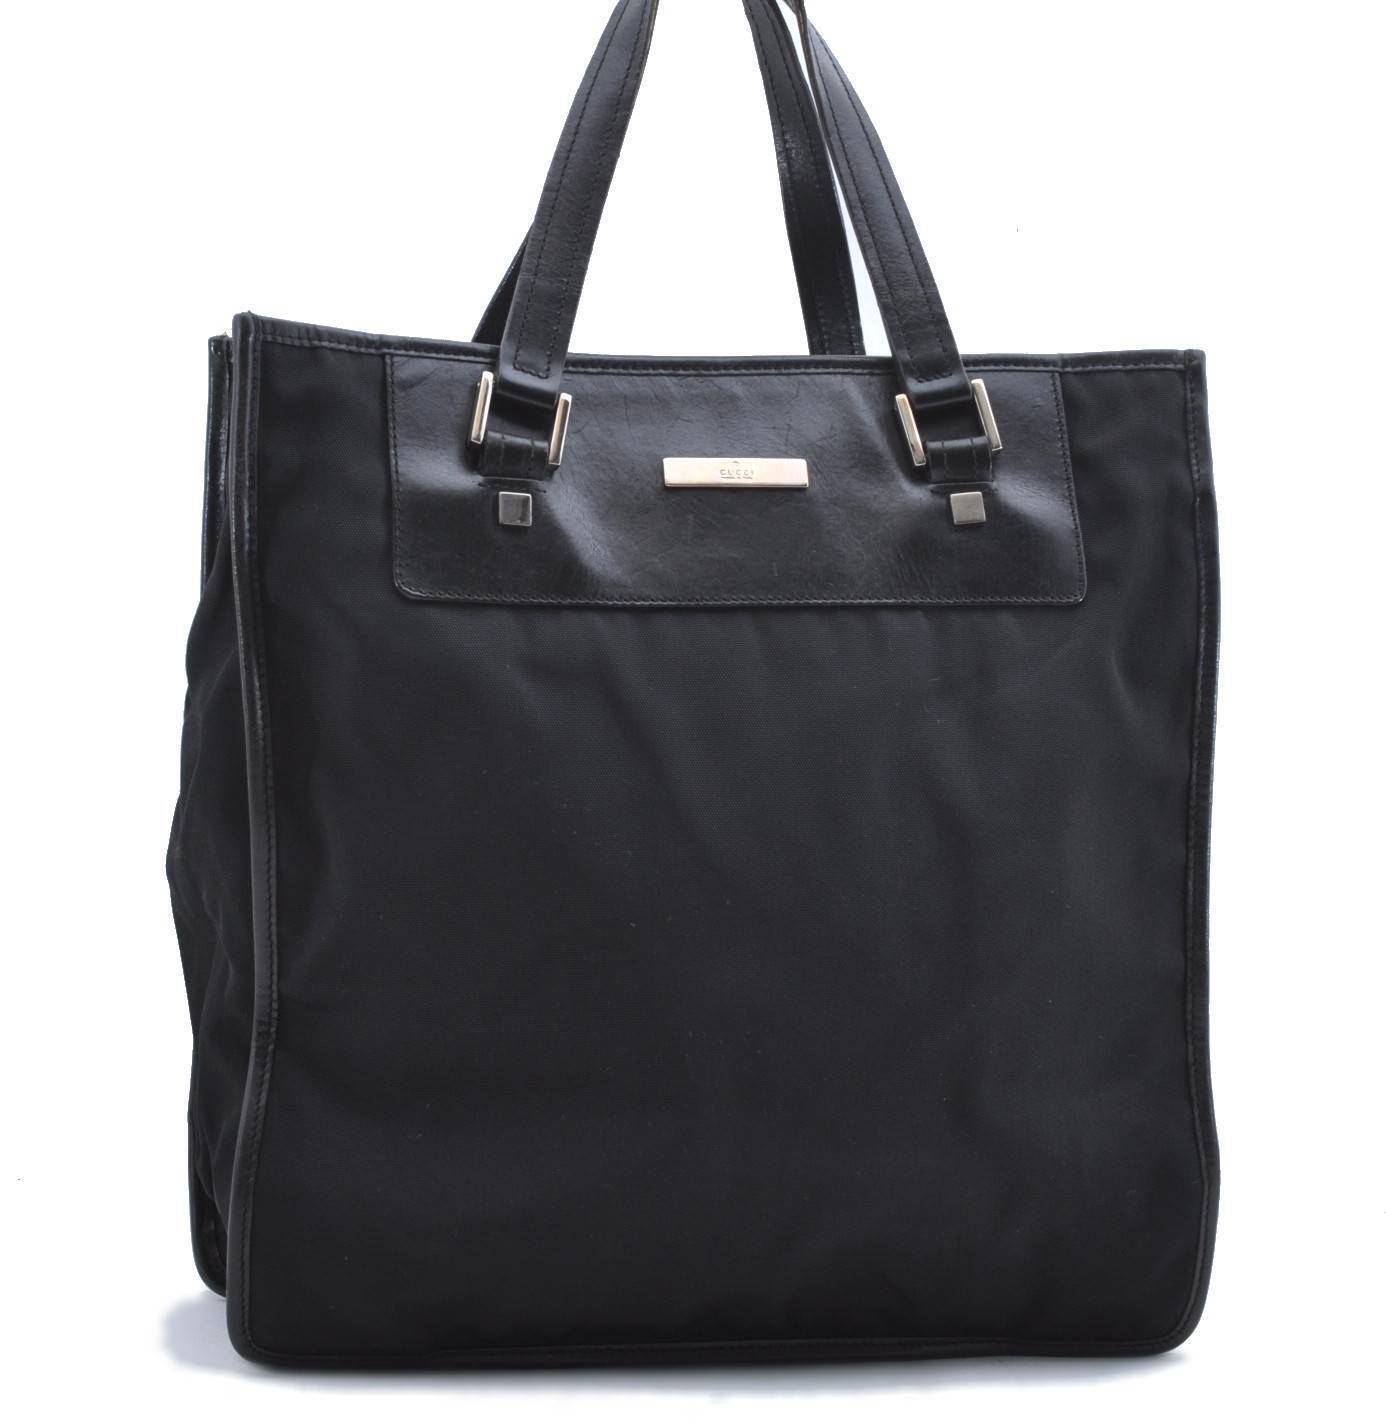 Authentic GUCCI Tote Hand Bag Nylon Leather 0190346 Black 1094C